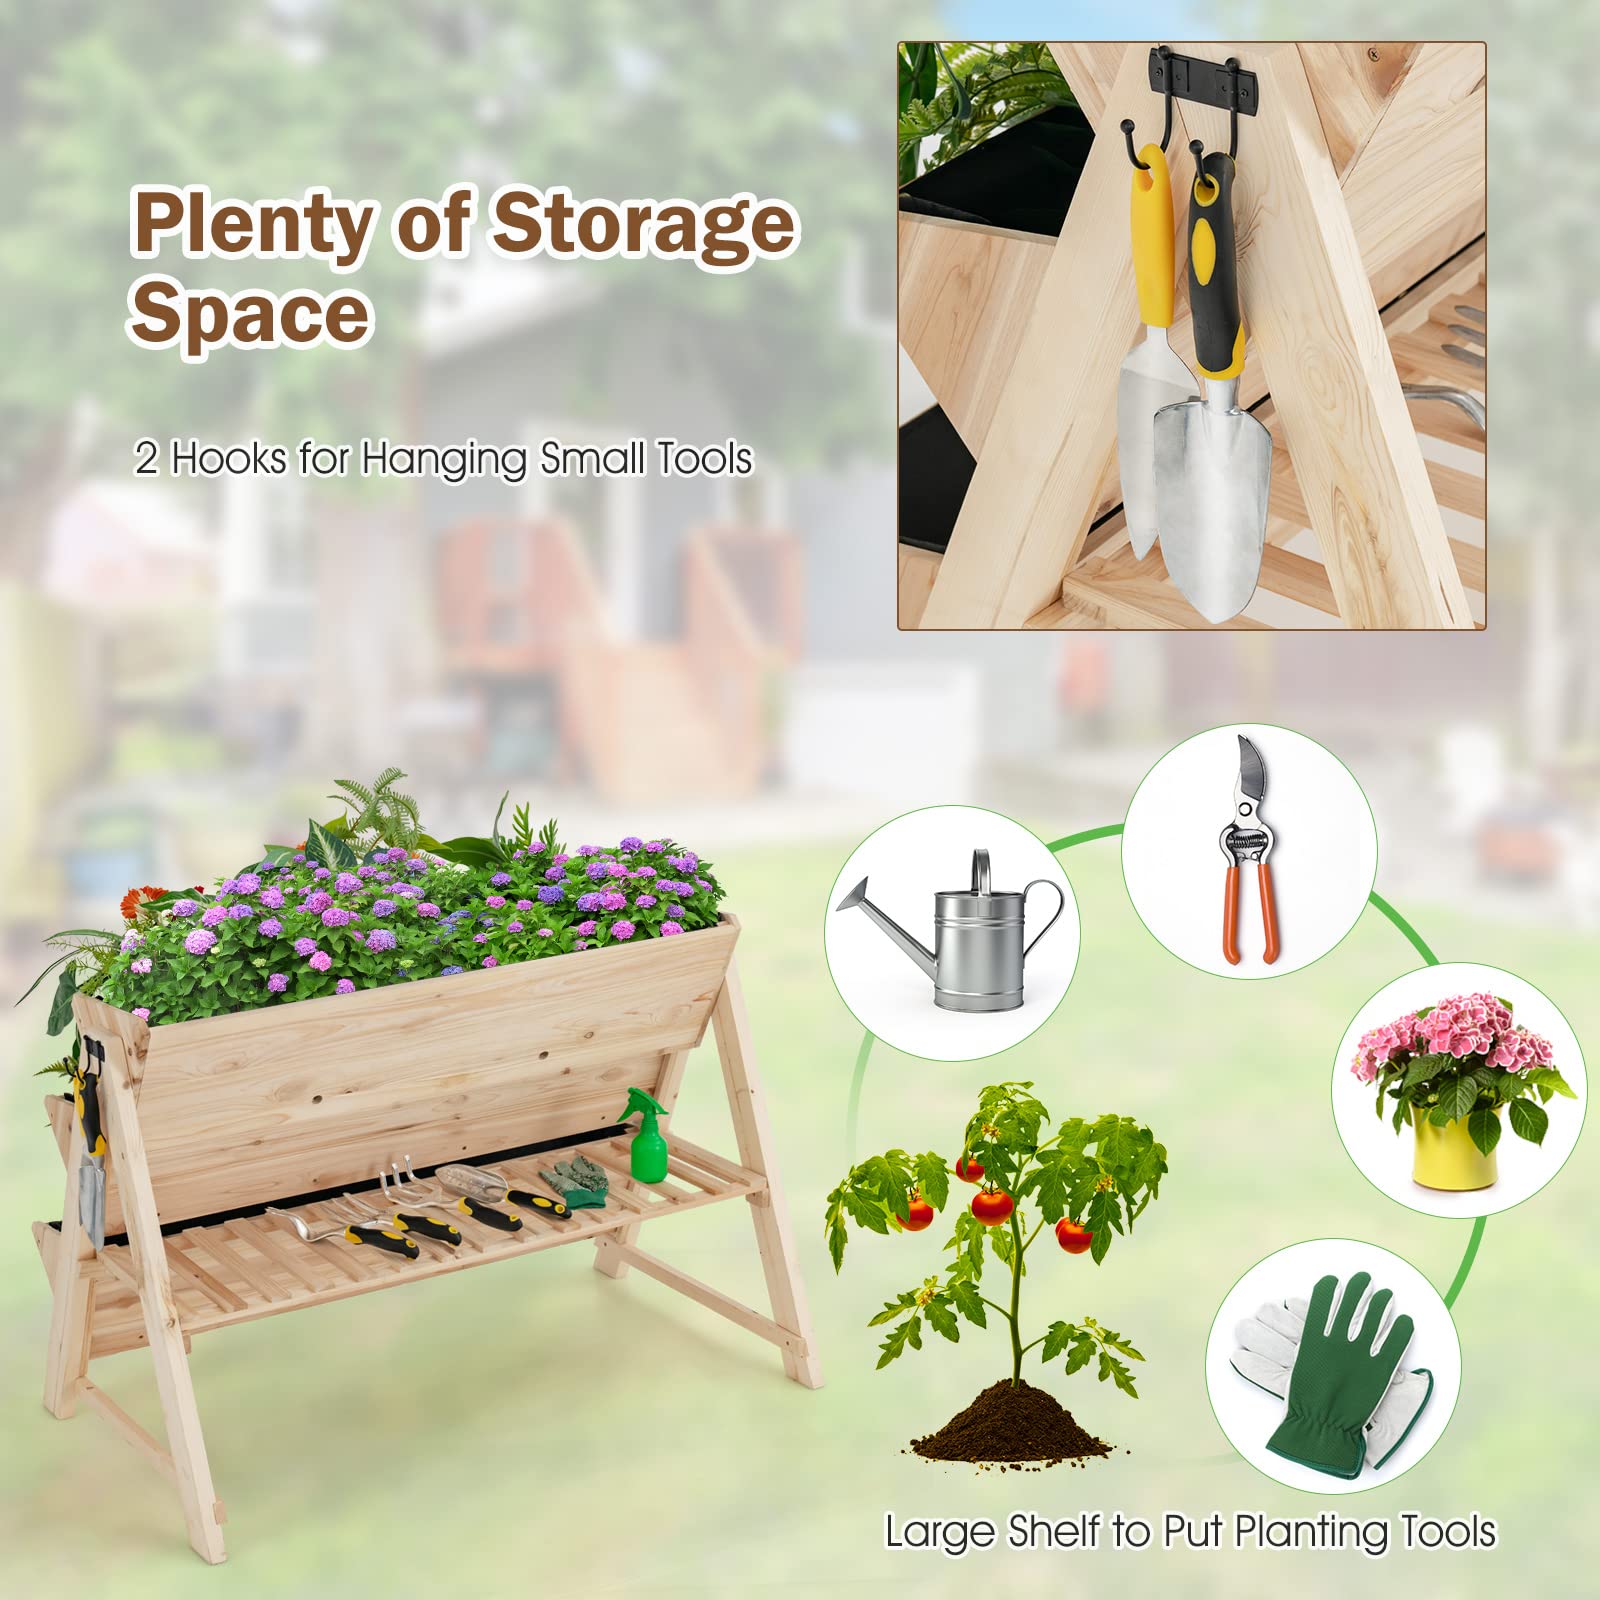 Giantex Raised Garden Bed, Vertical Planter with Storage Shelf (Natural)